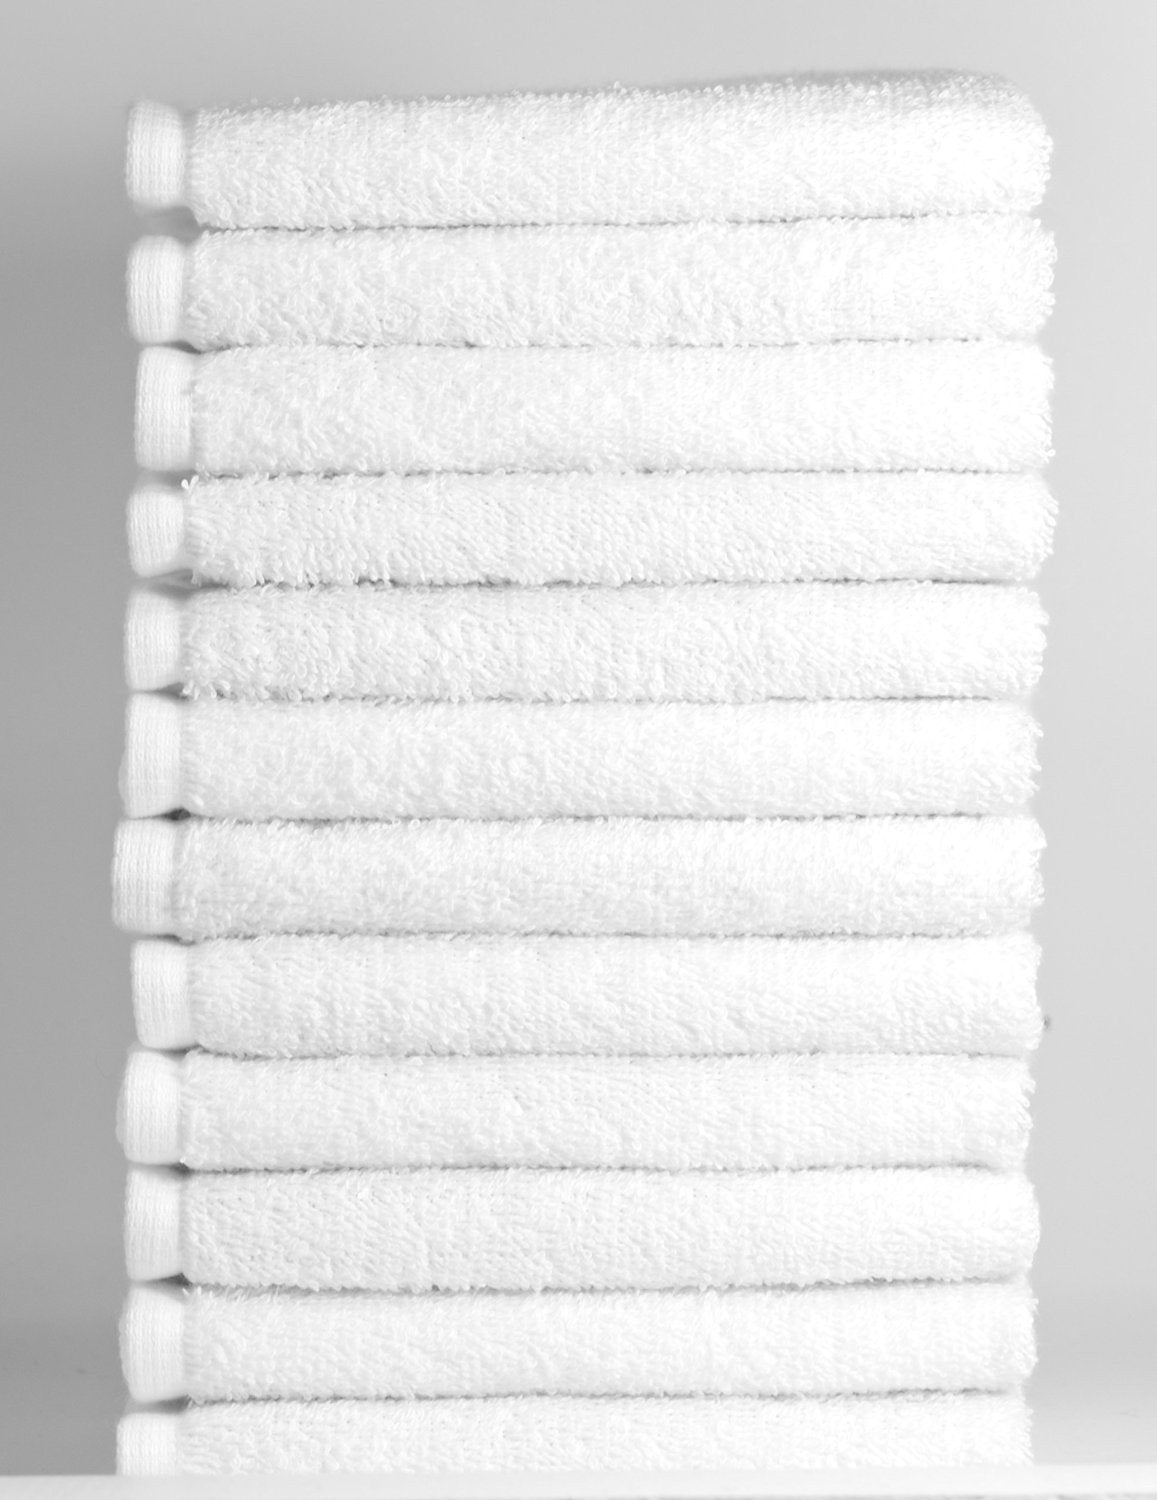 Washcloths, 6 Pack - size 12x12